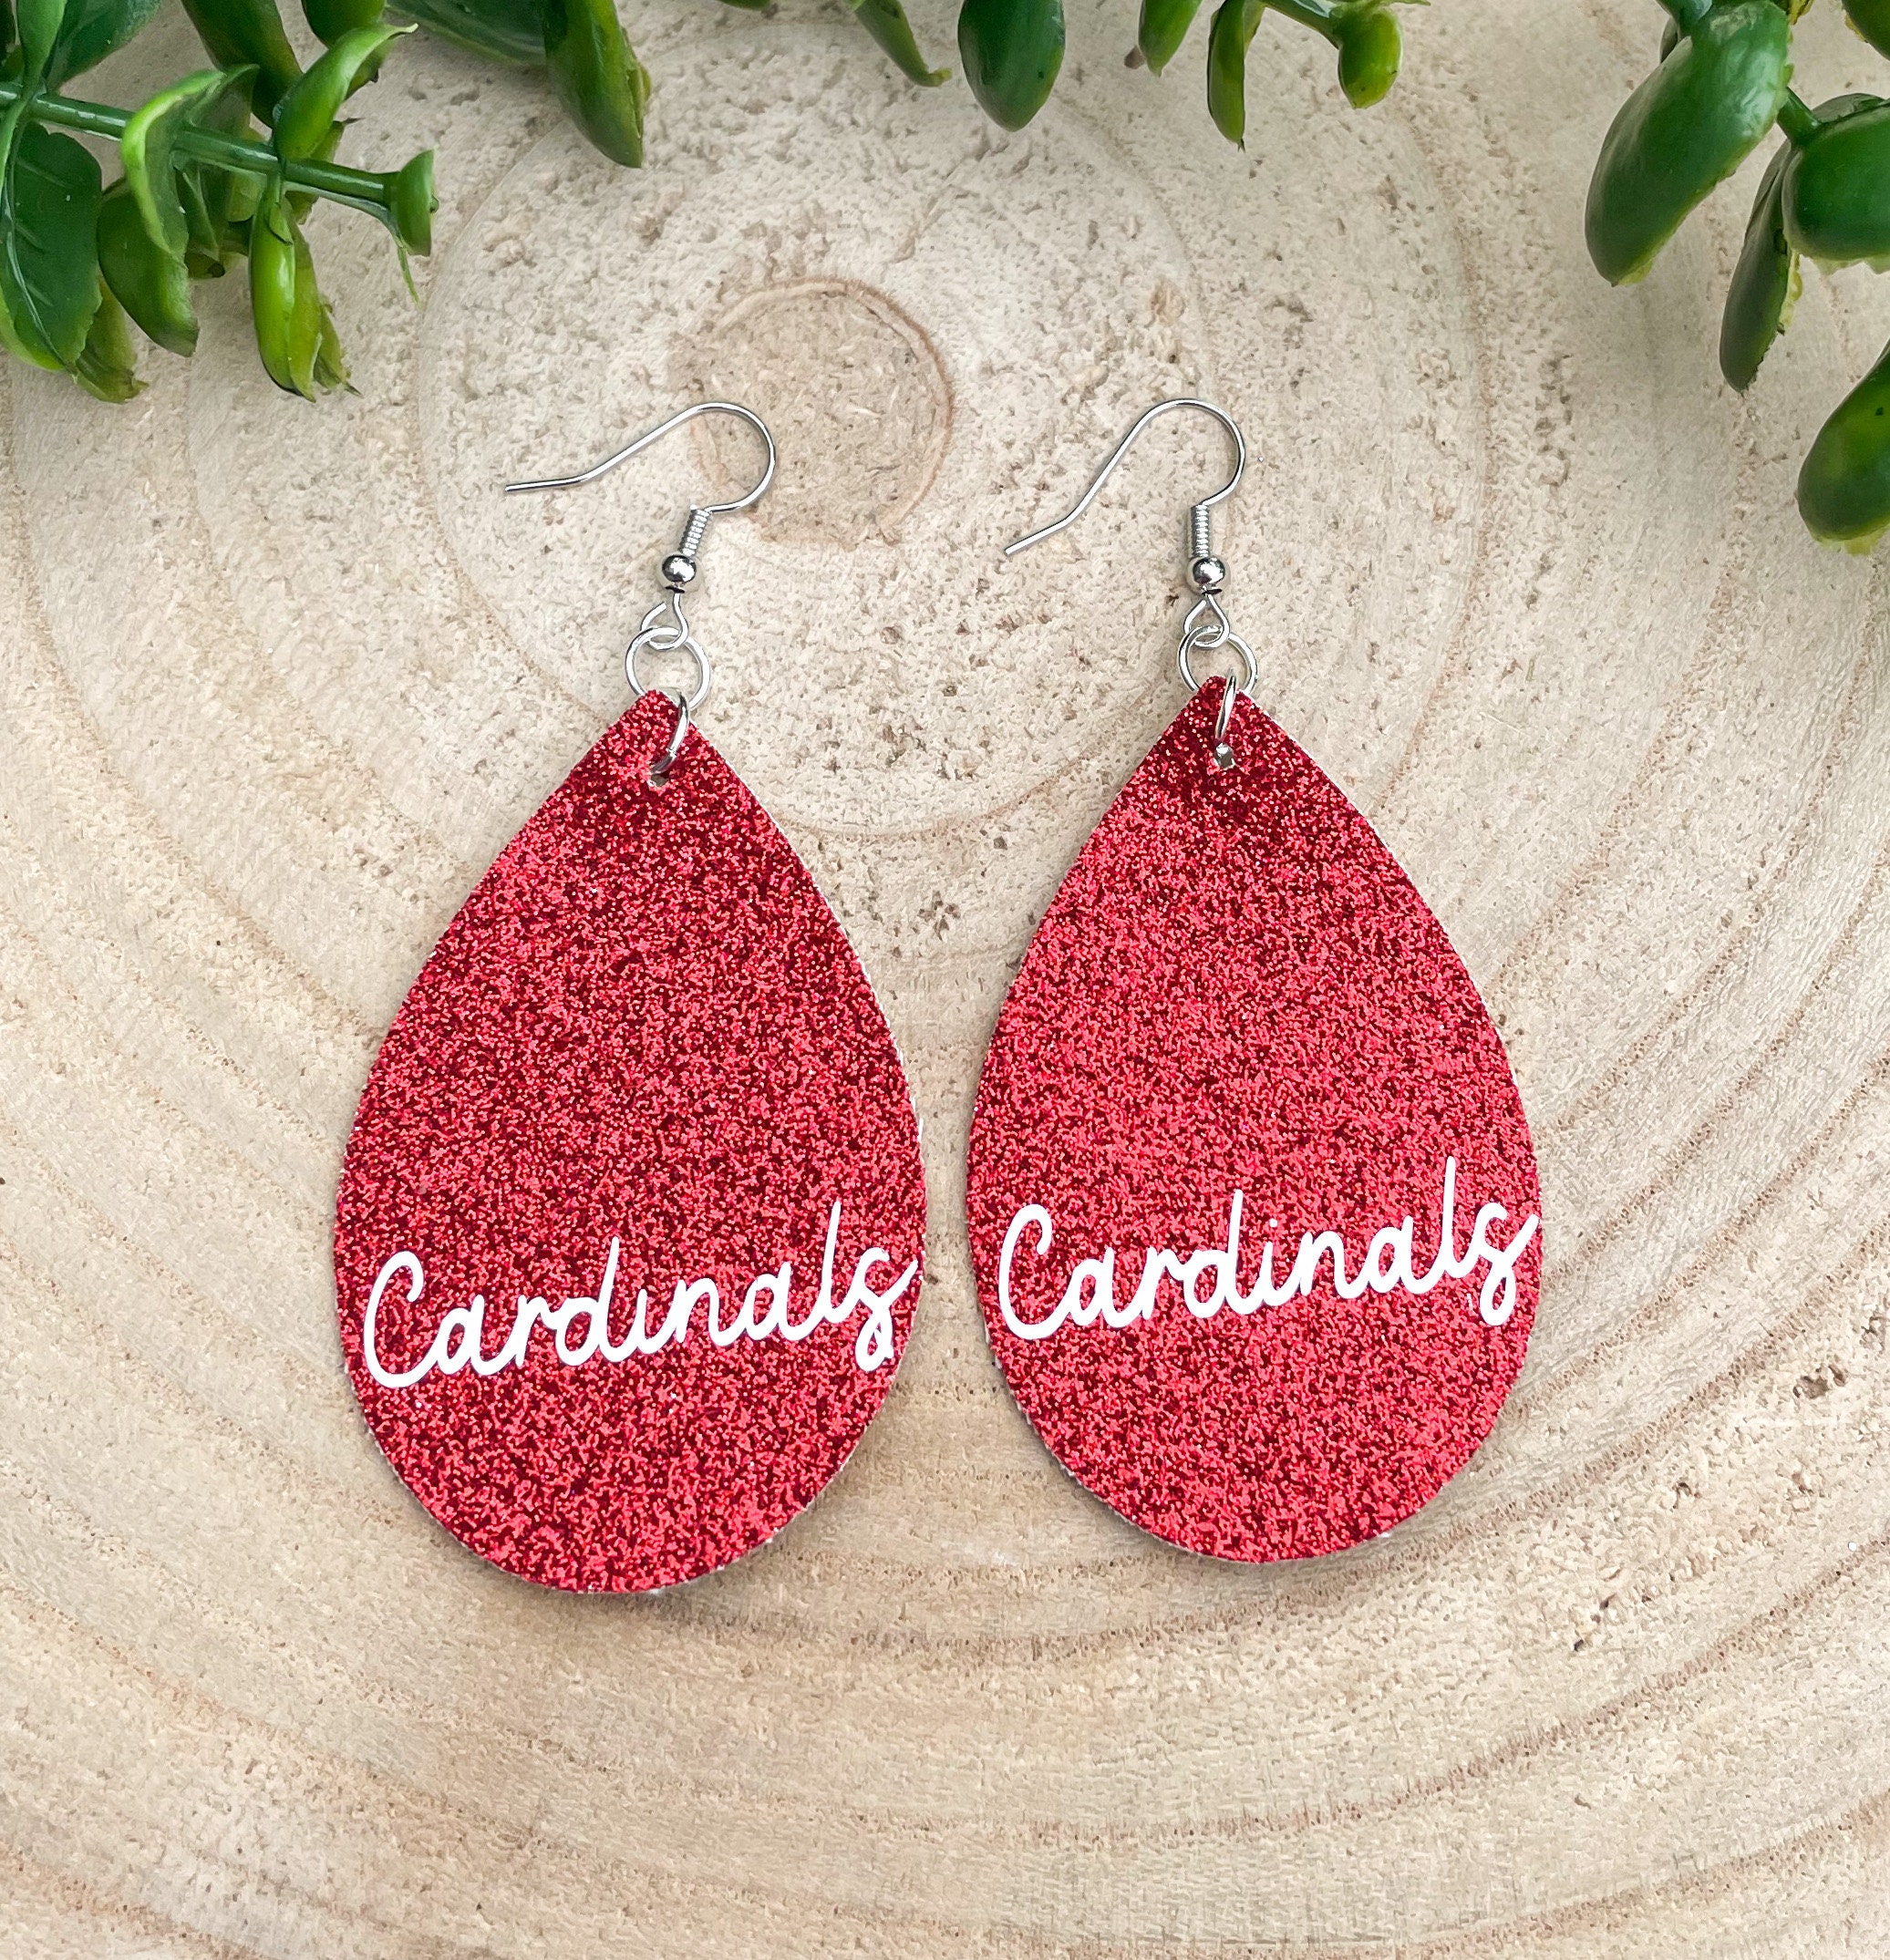 55427 Louisville Cardinals Double Disk Earrings